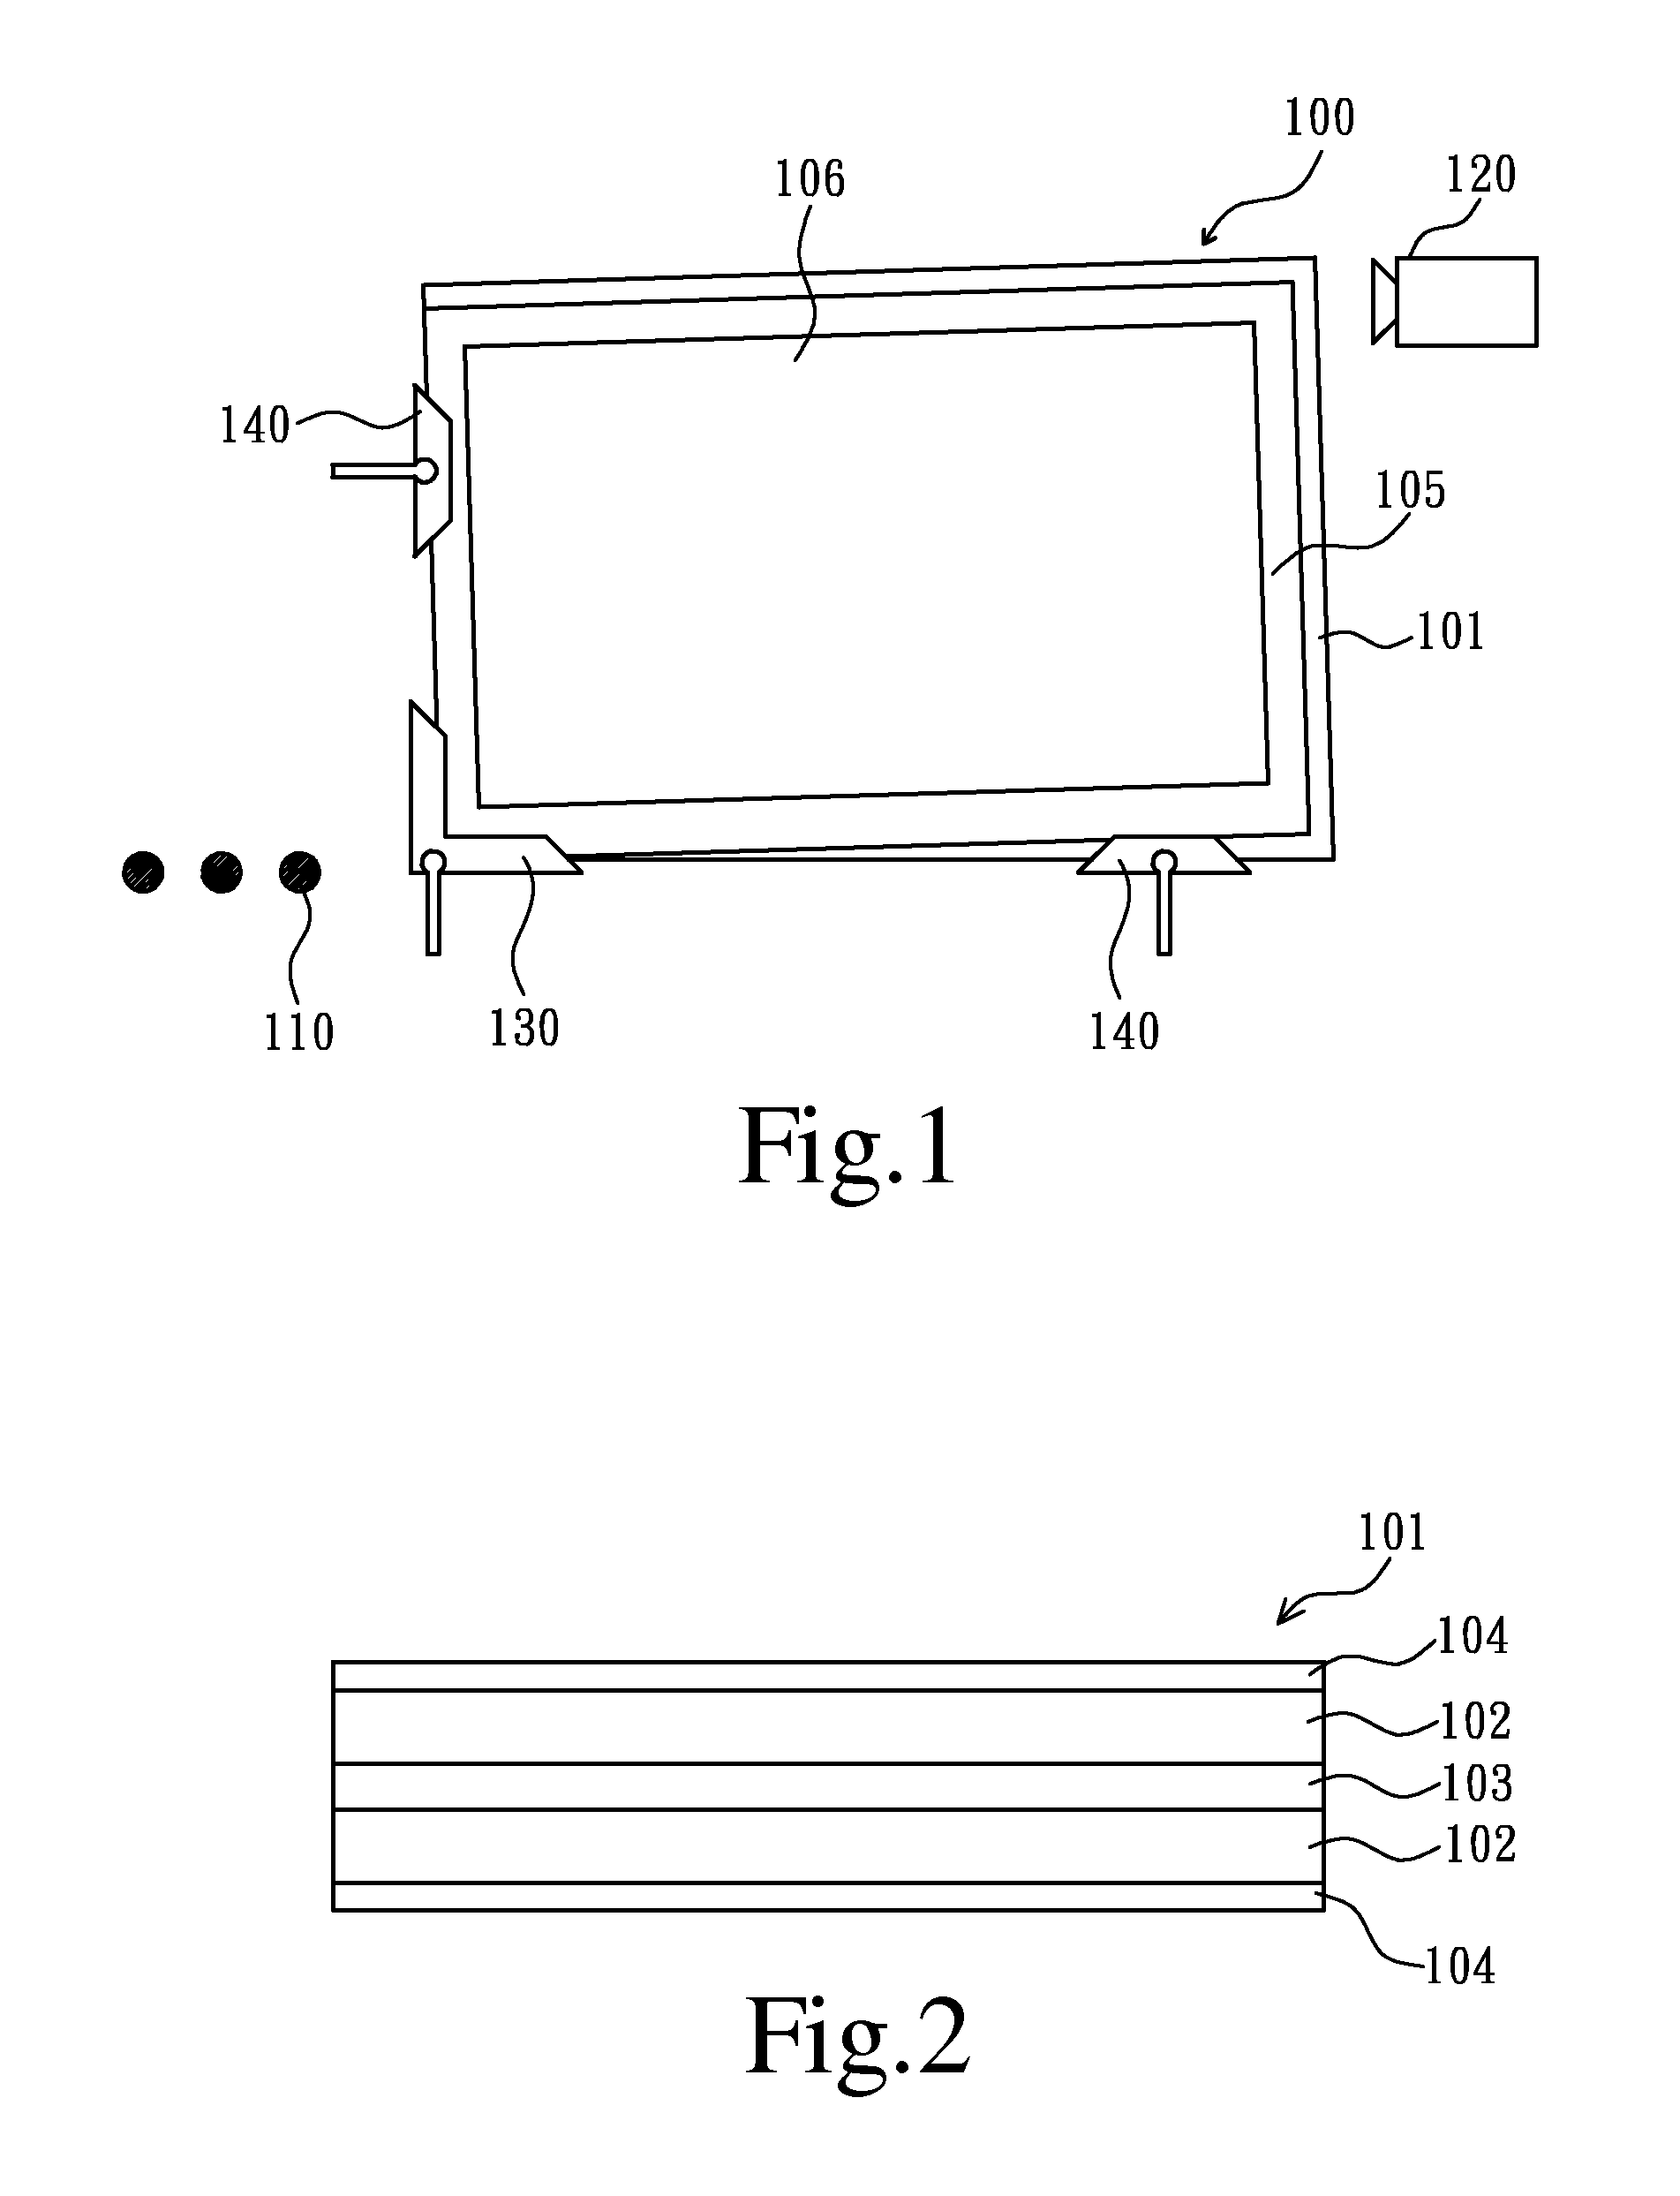 Panel alignment apparatus and panel alignment method